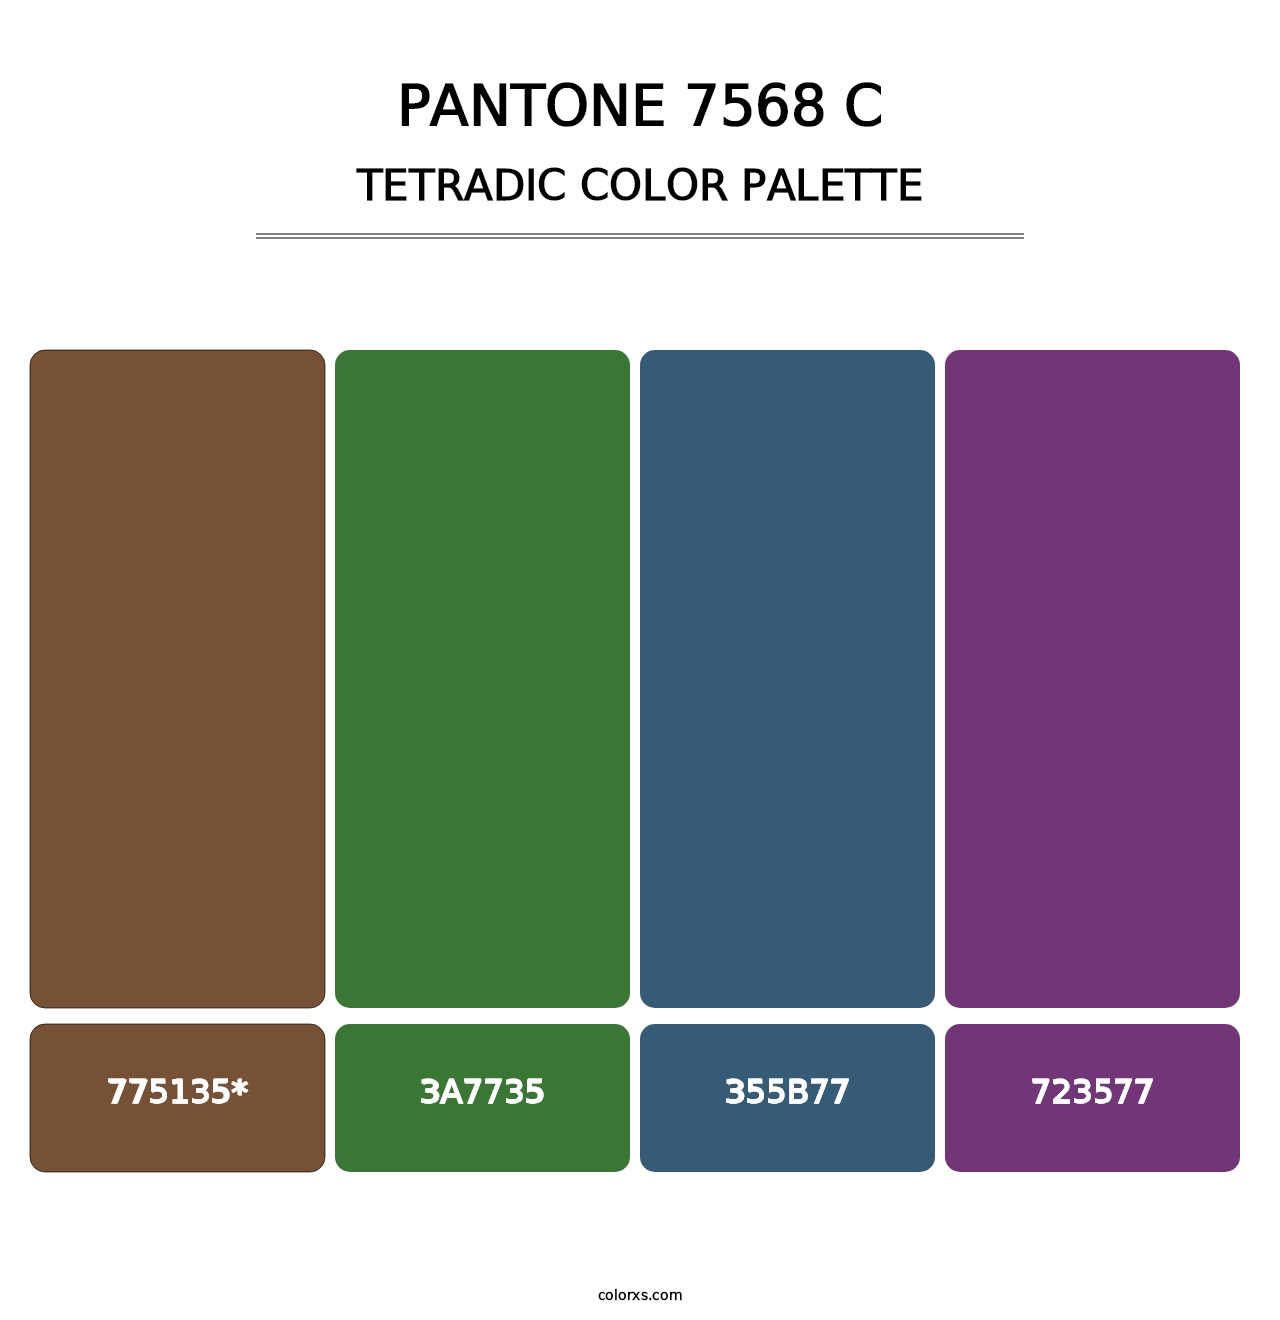 PANTONE 7568 C - Tetradic Color Palette